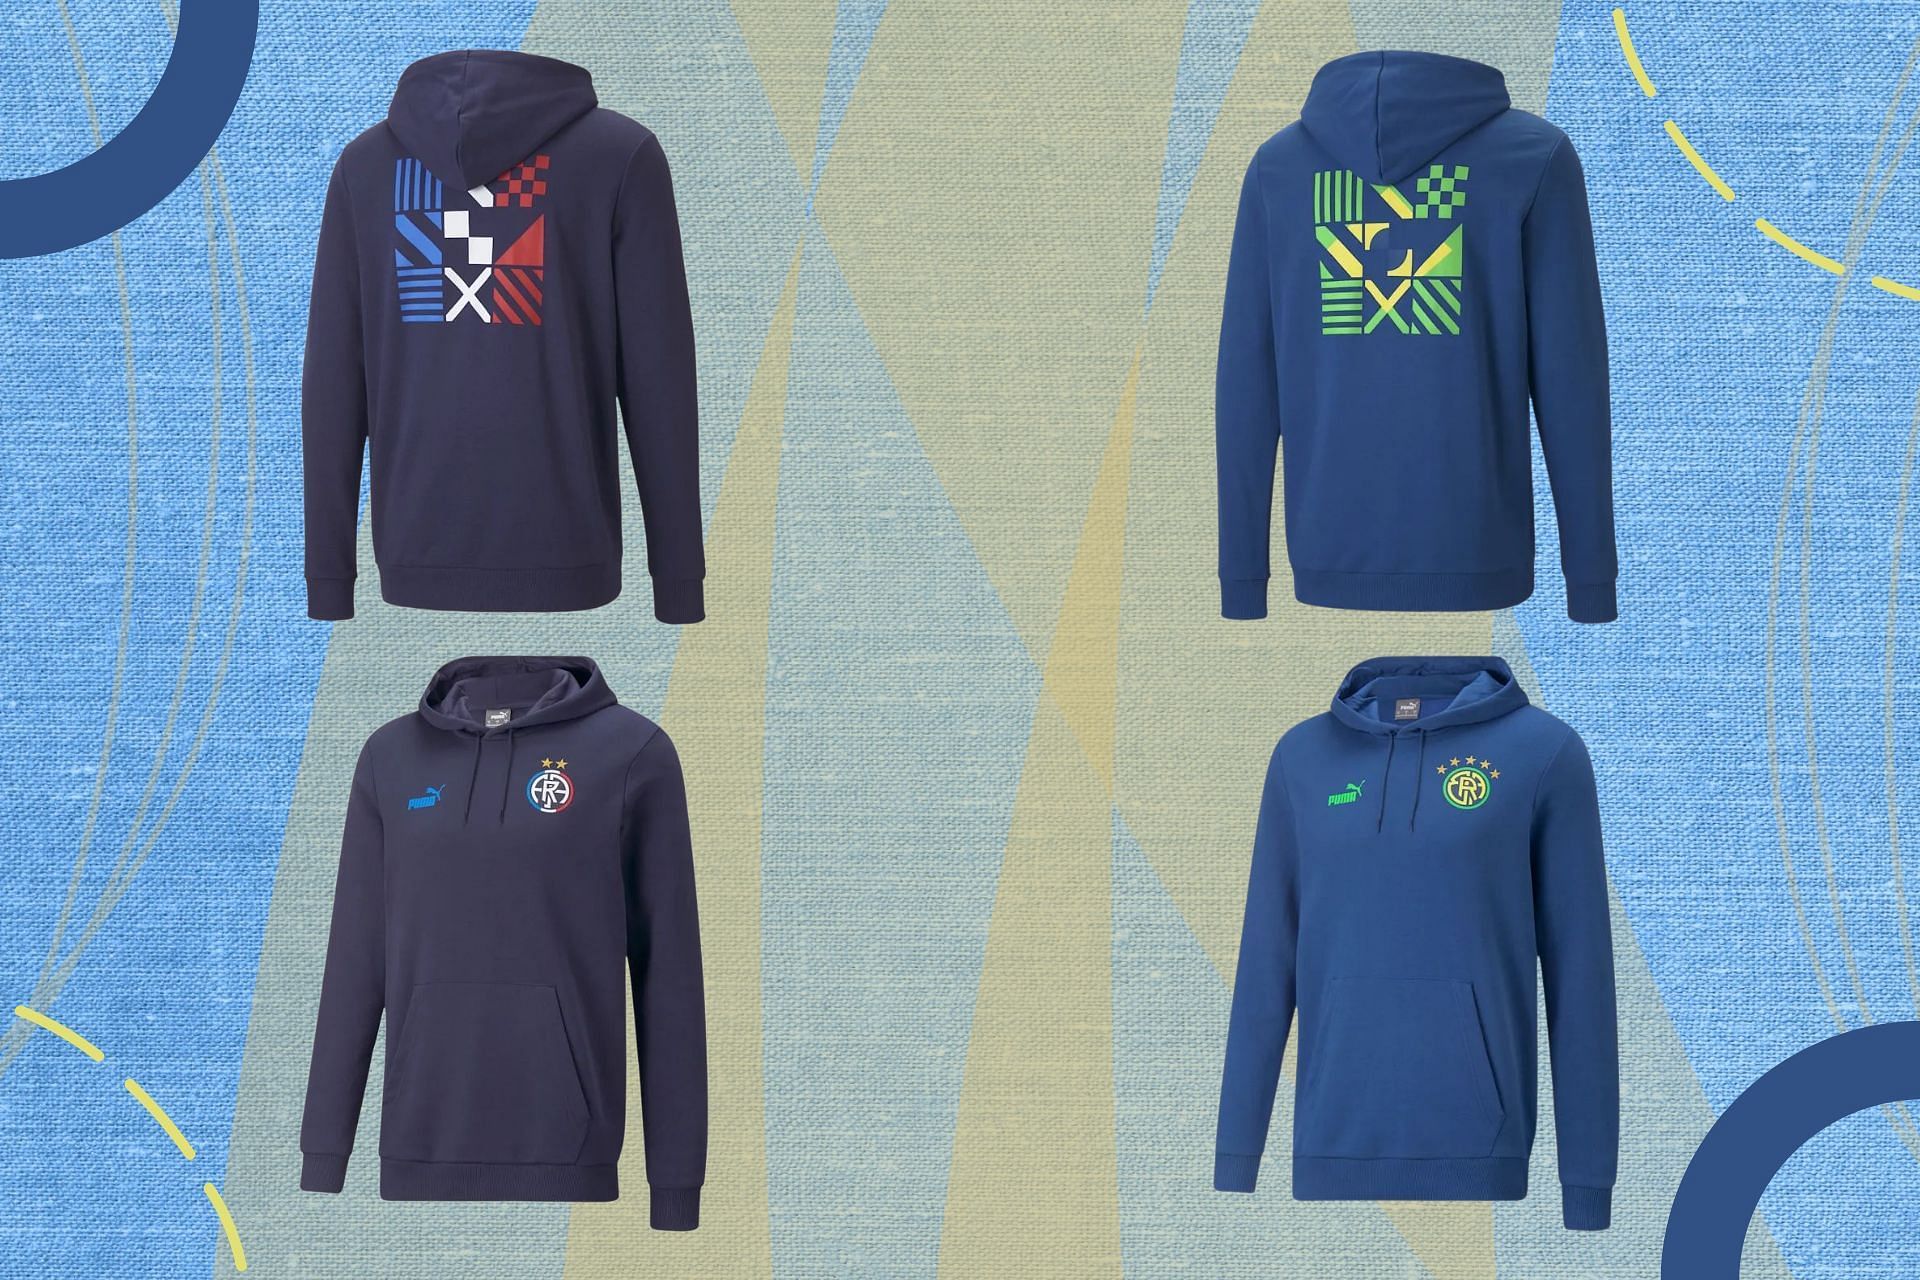 Puma World Cup fanwear hoodie collection (Image via Sportskeeda)